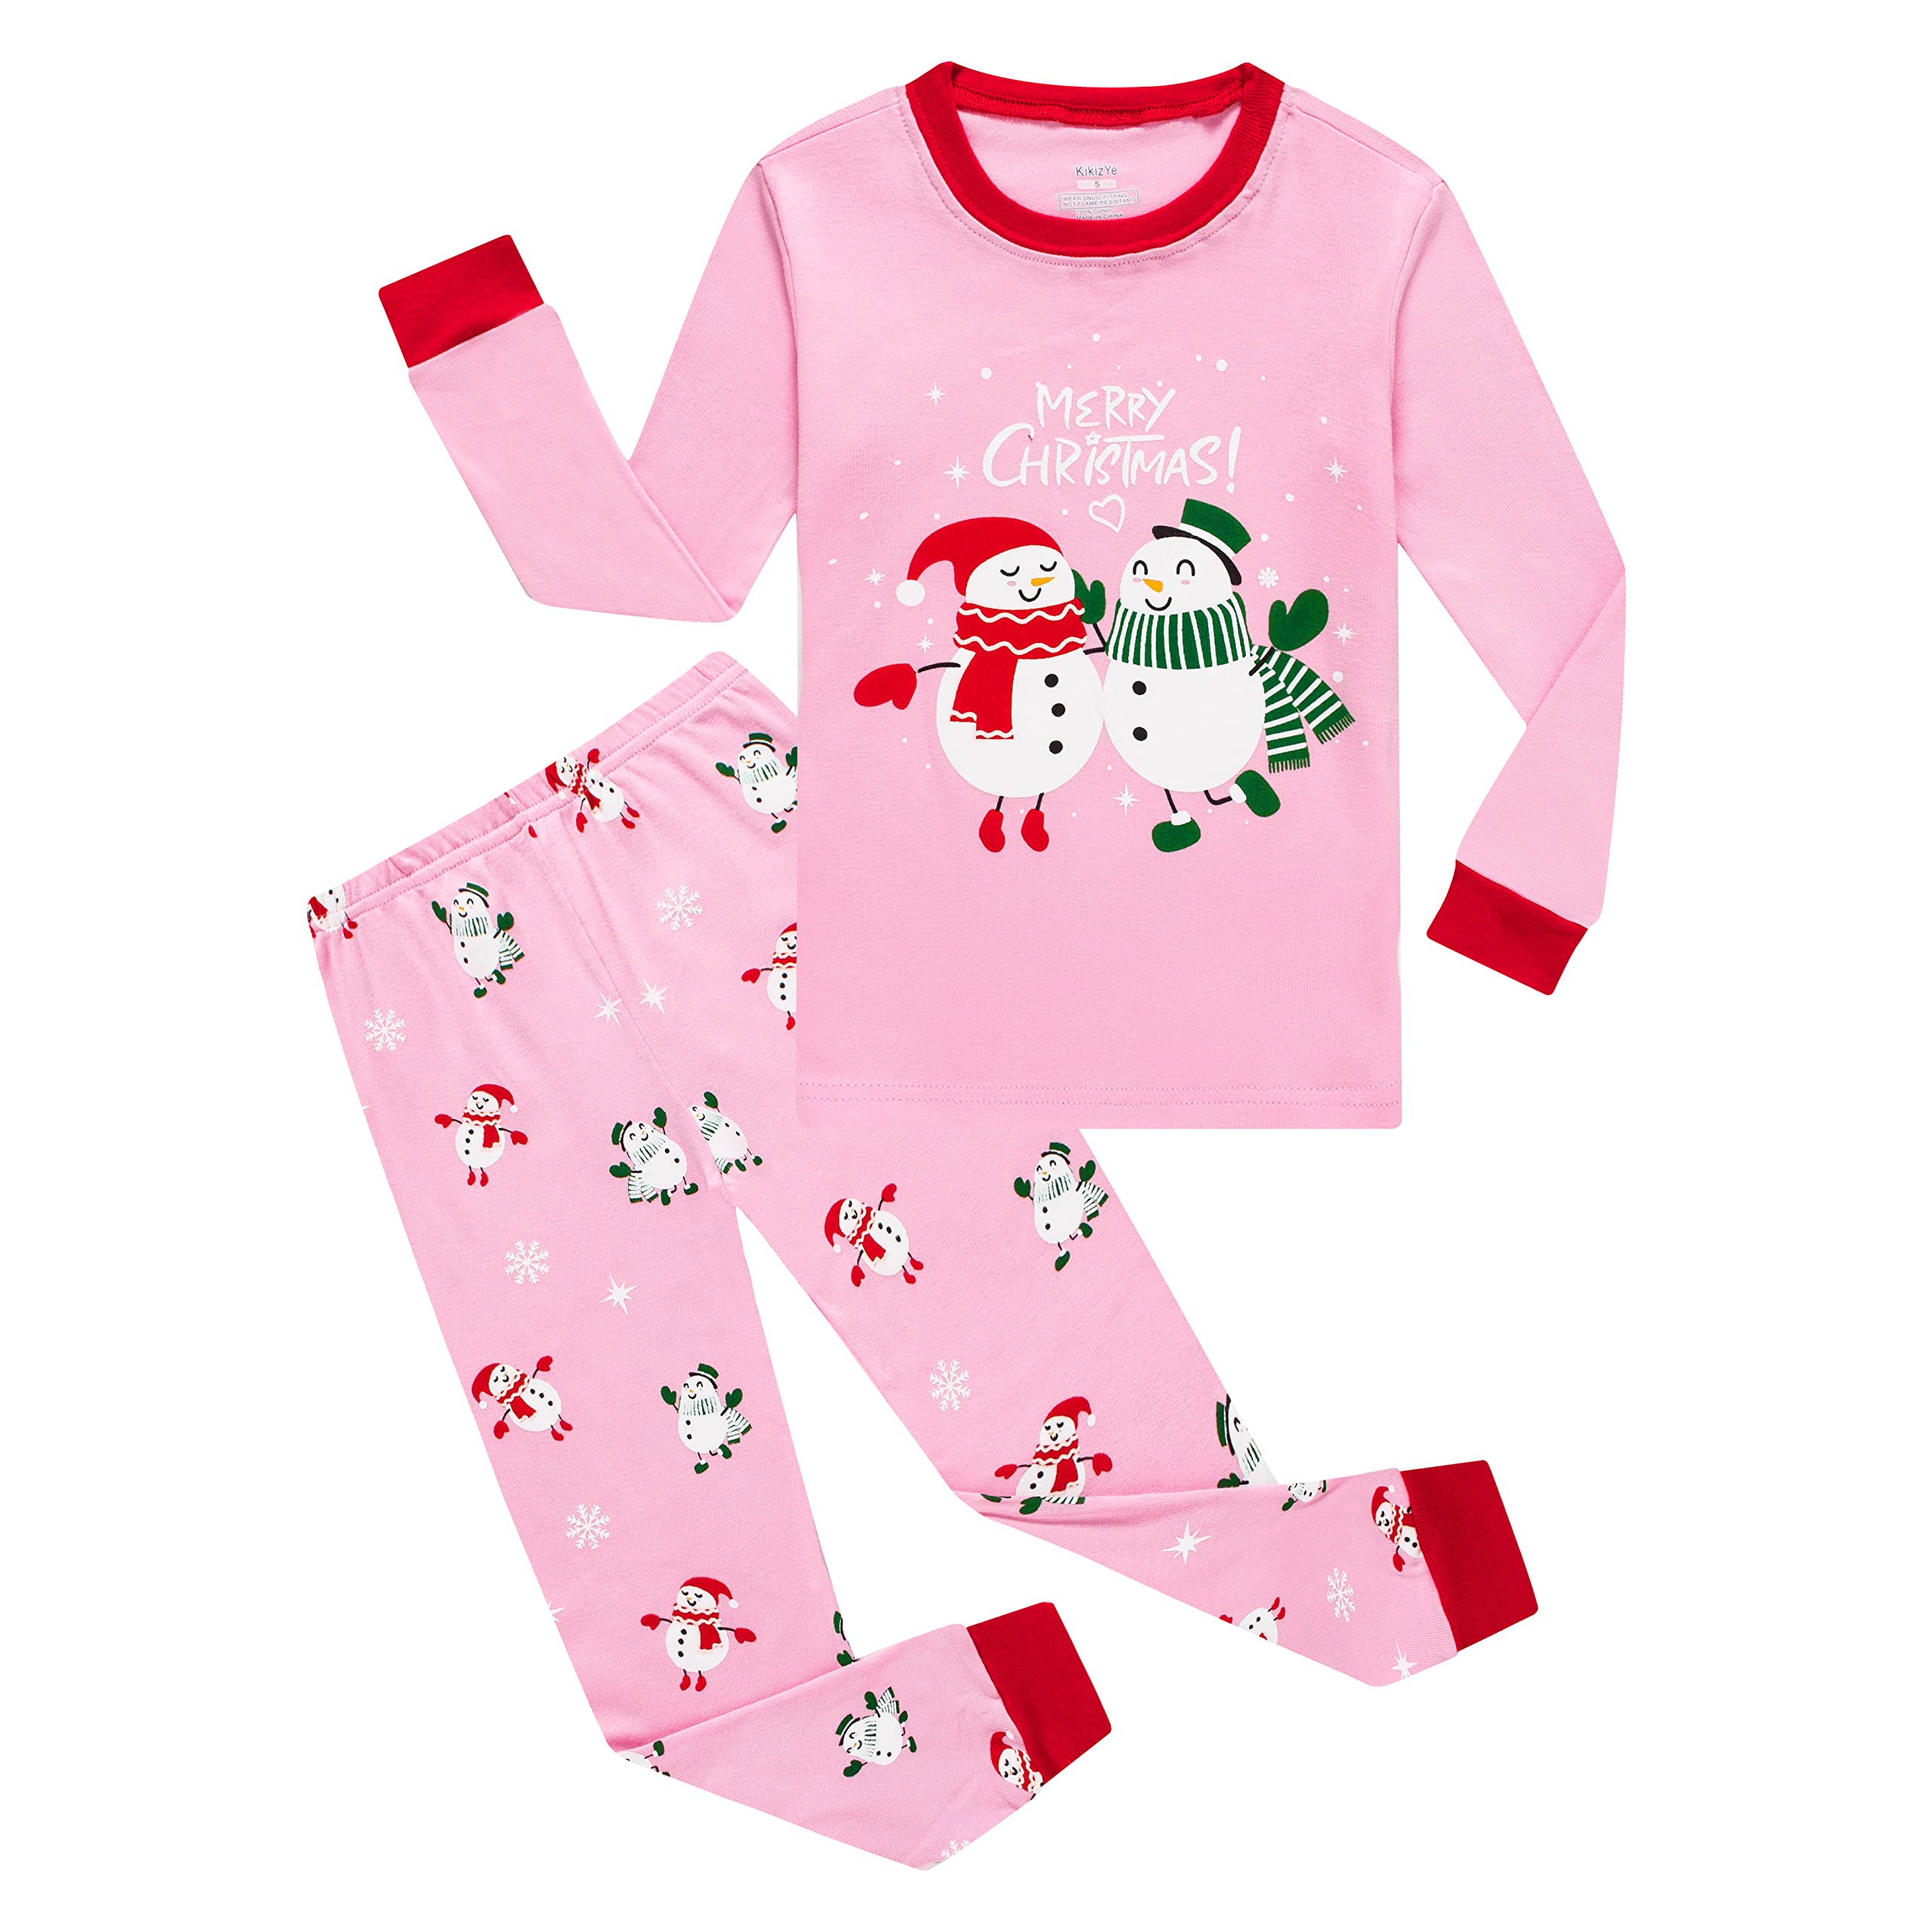 Kikizye Christmas Snowman Baby Girls Holiday Pjs 100 Cotton Long Sleeve Kids Infant Pajamas Sets Size 12-18 Months Pink